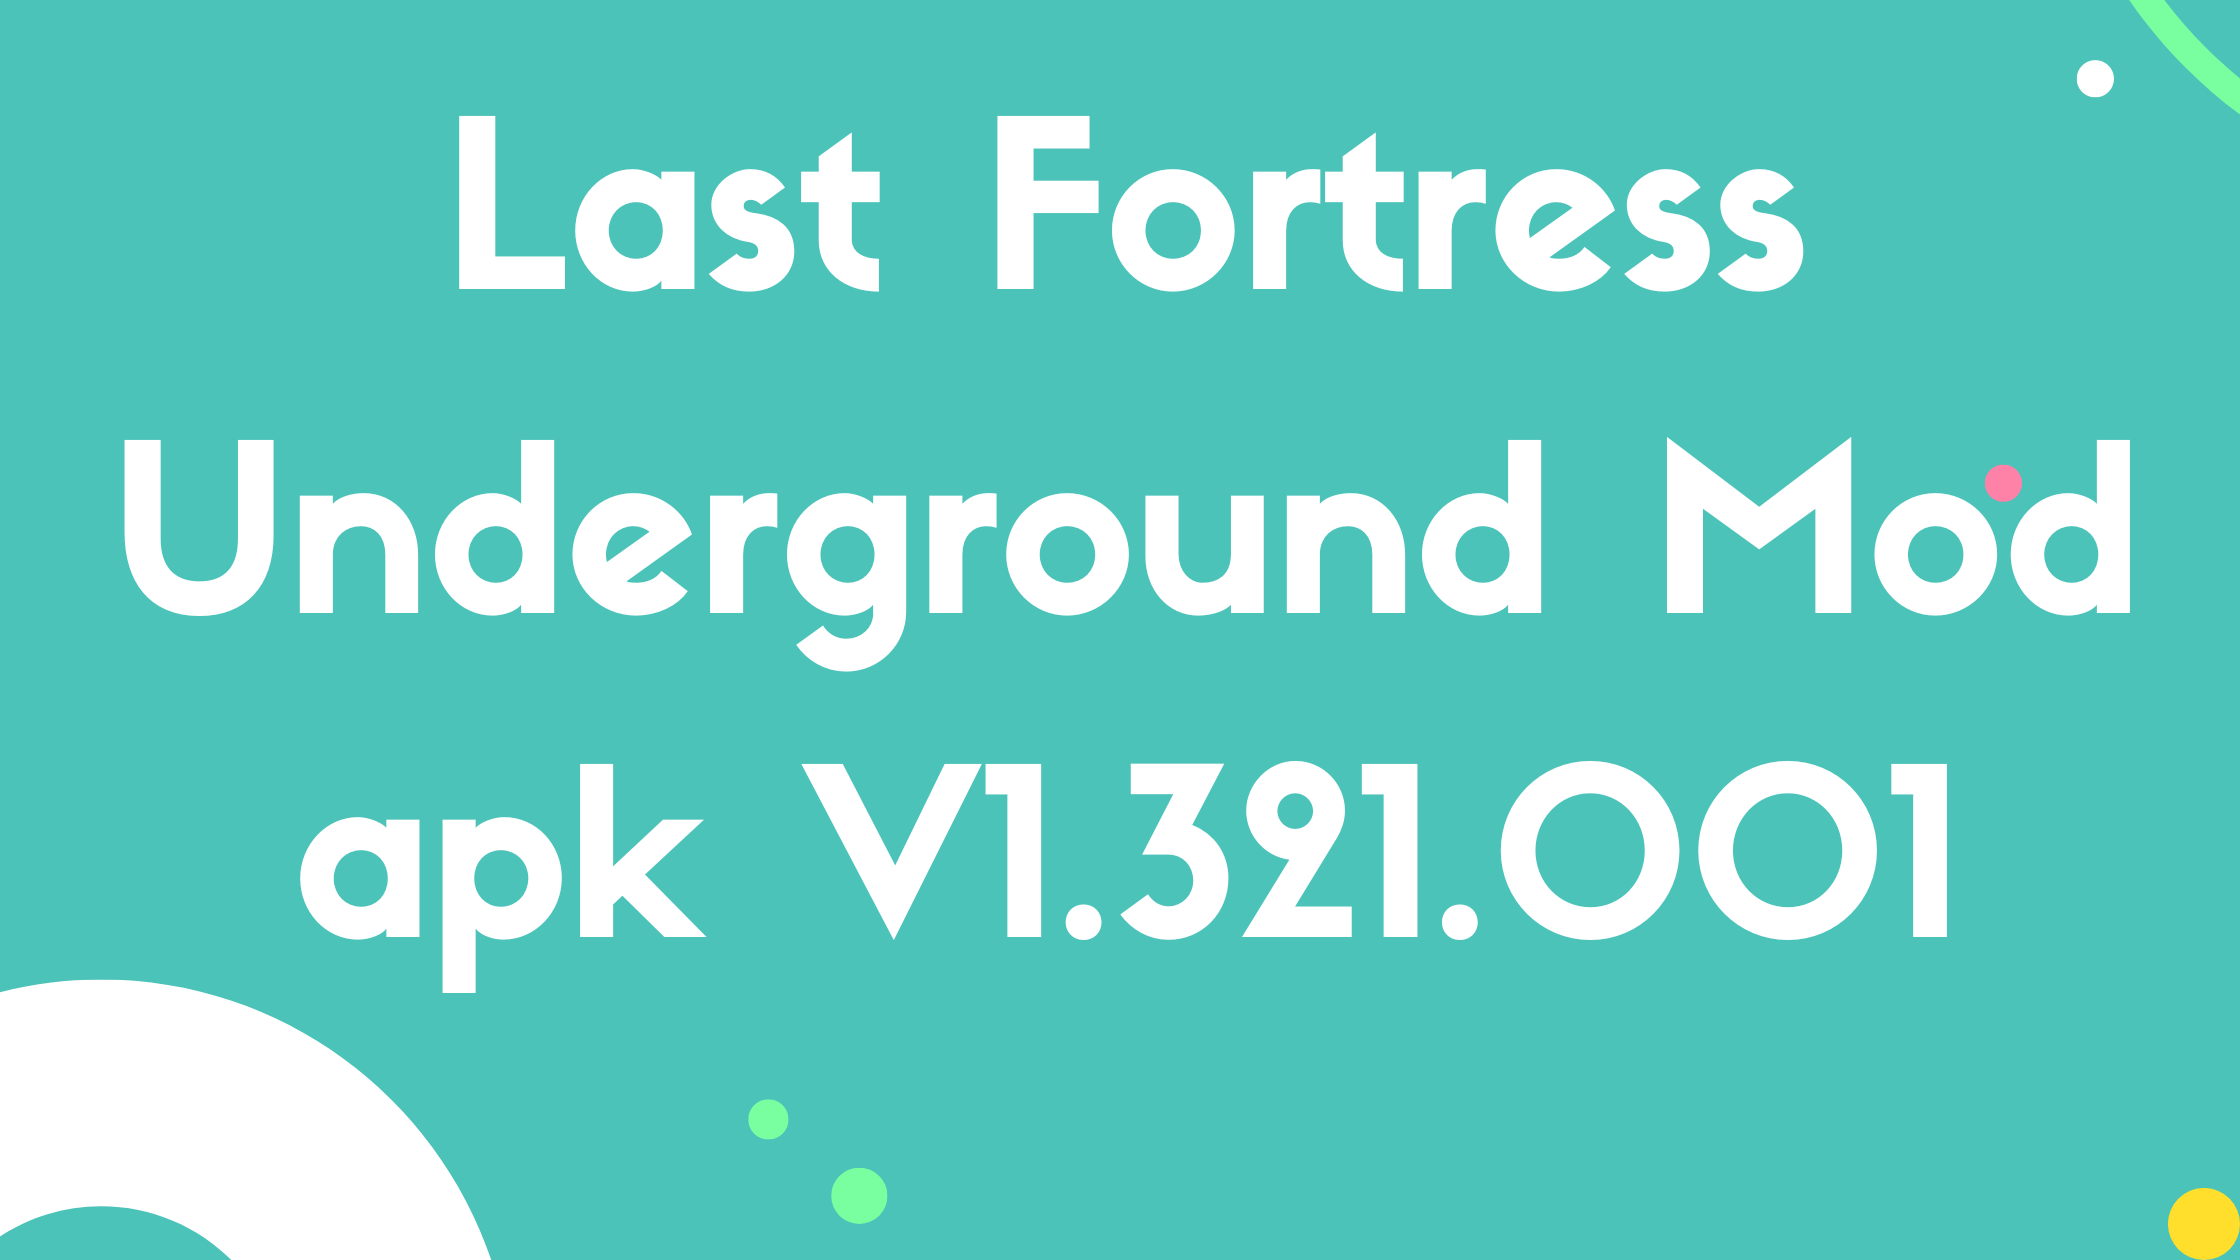 Last Fortress Underground Mod apk V1.321.001